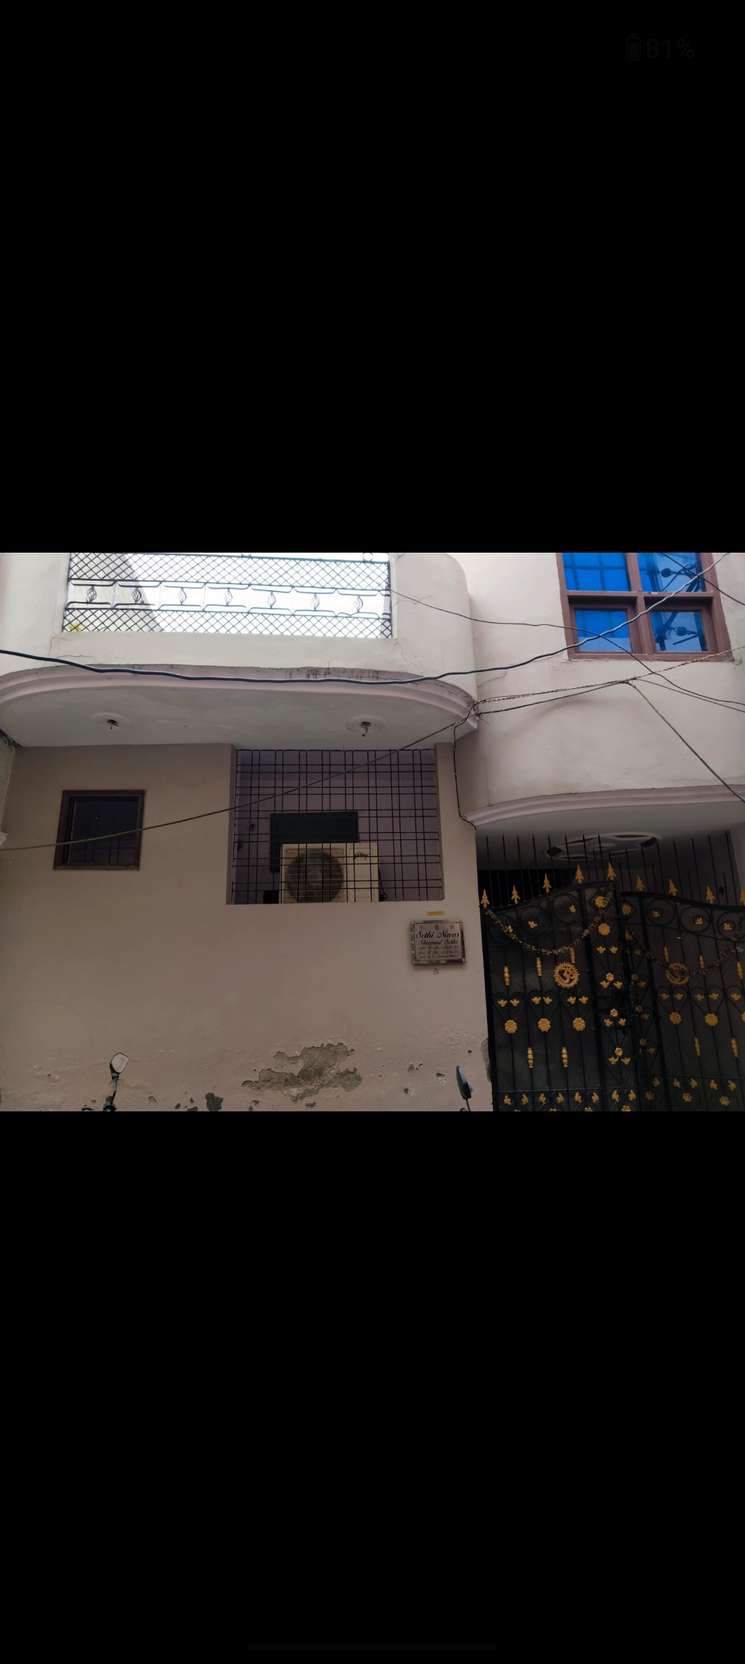 3.5 Bedroom 85 Sq.Yd. Independent House in Laxman Vihar Gurgaon